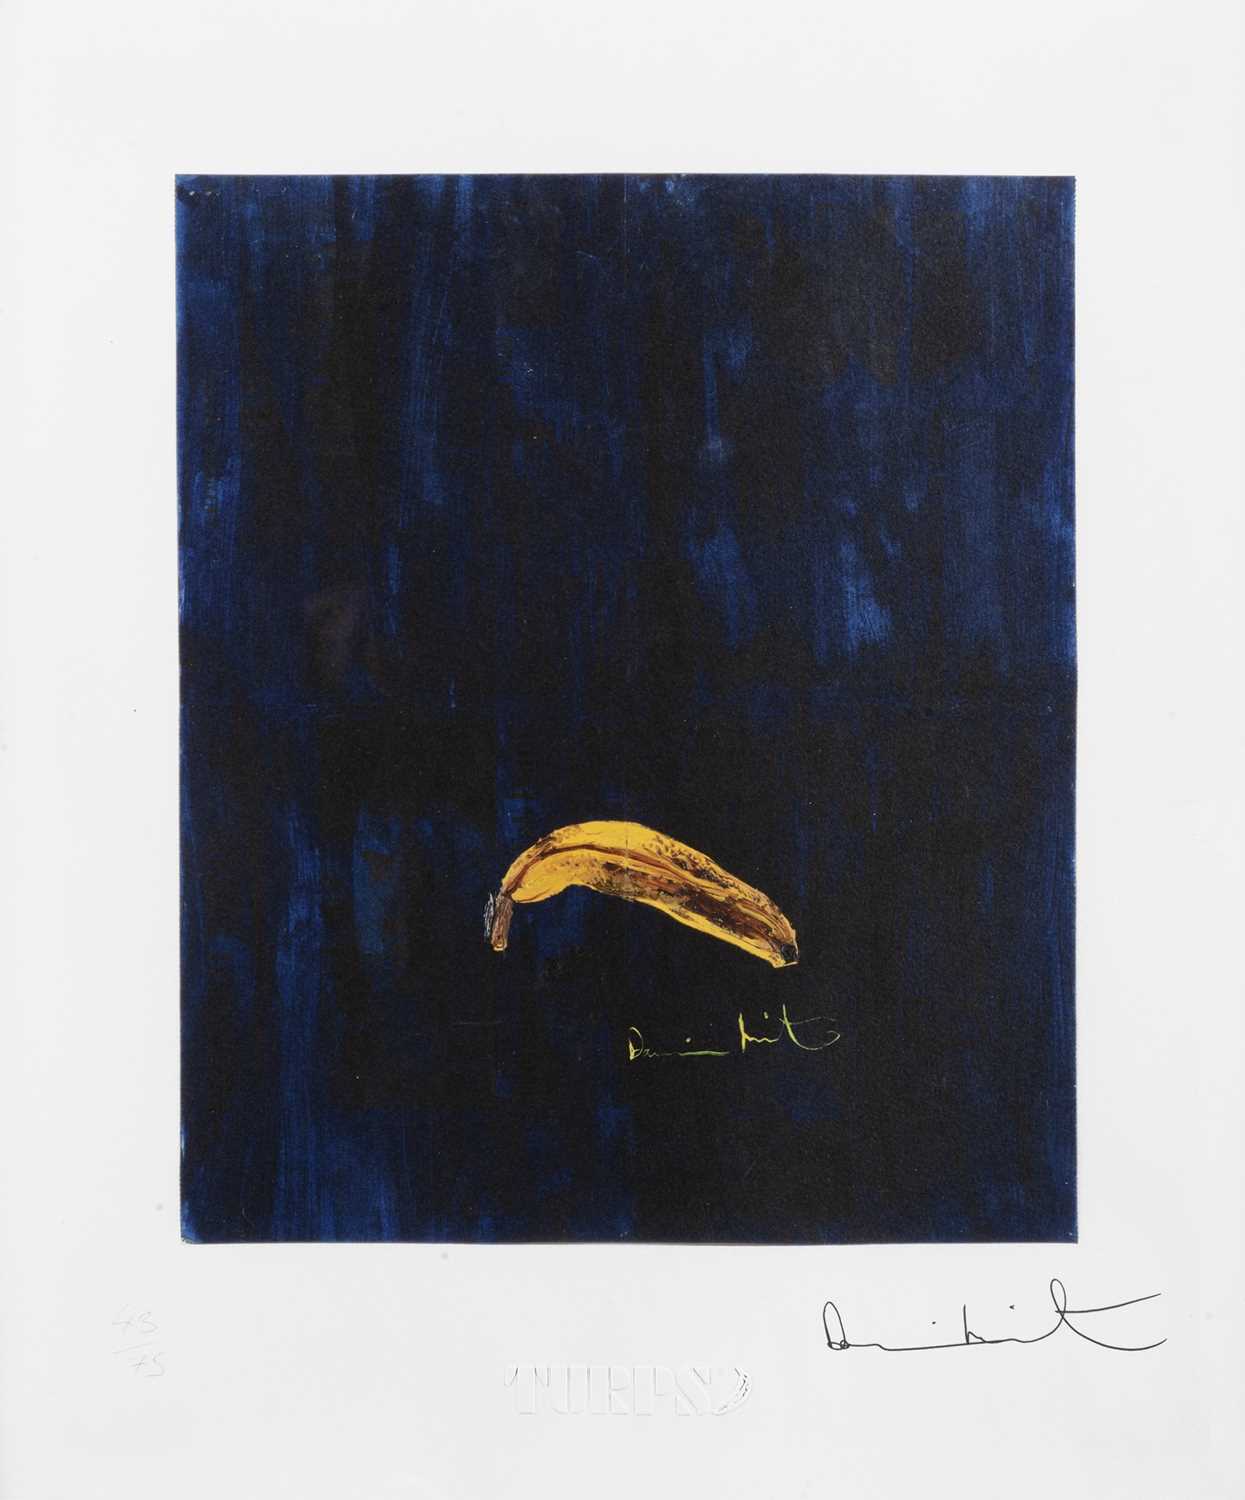 Lot 246 - Damien Hirst (British b.1965), 'Turps Banana', 2011